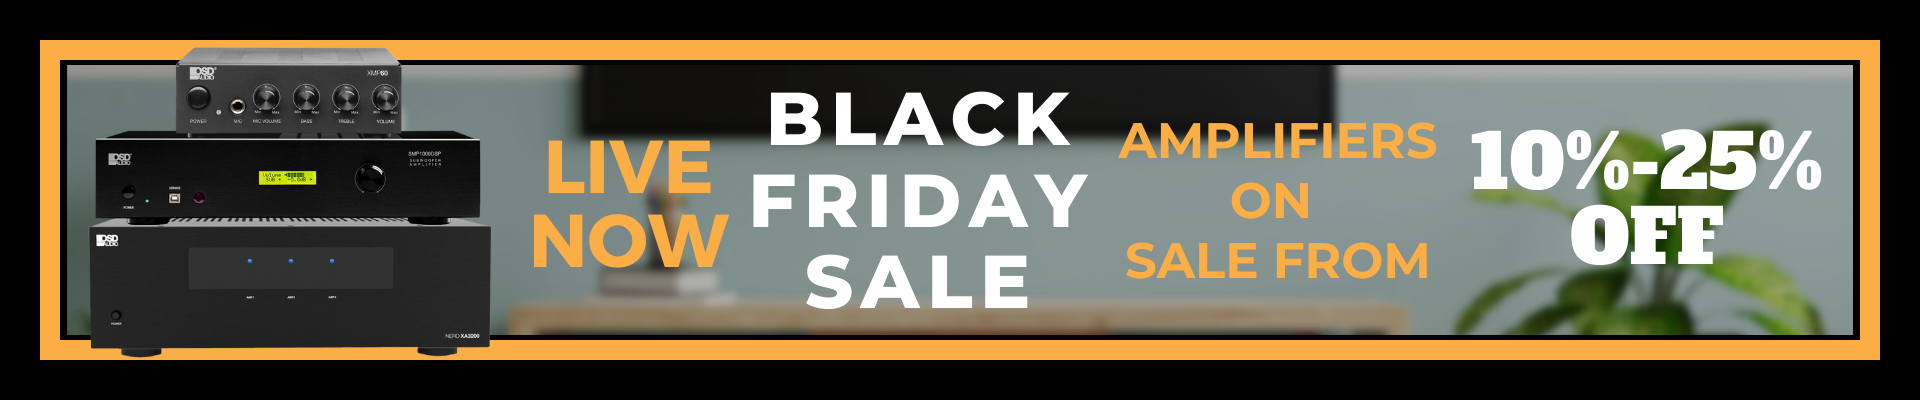 Black Friday Amplifiers on Sale Banner. Deals Between 10-25% Off.